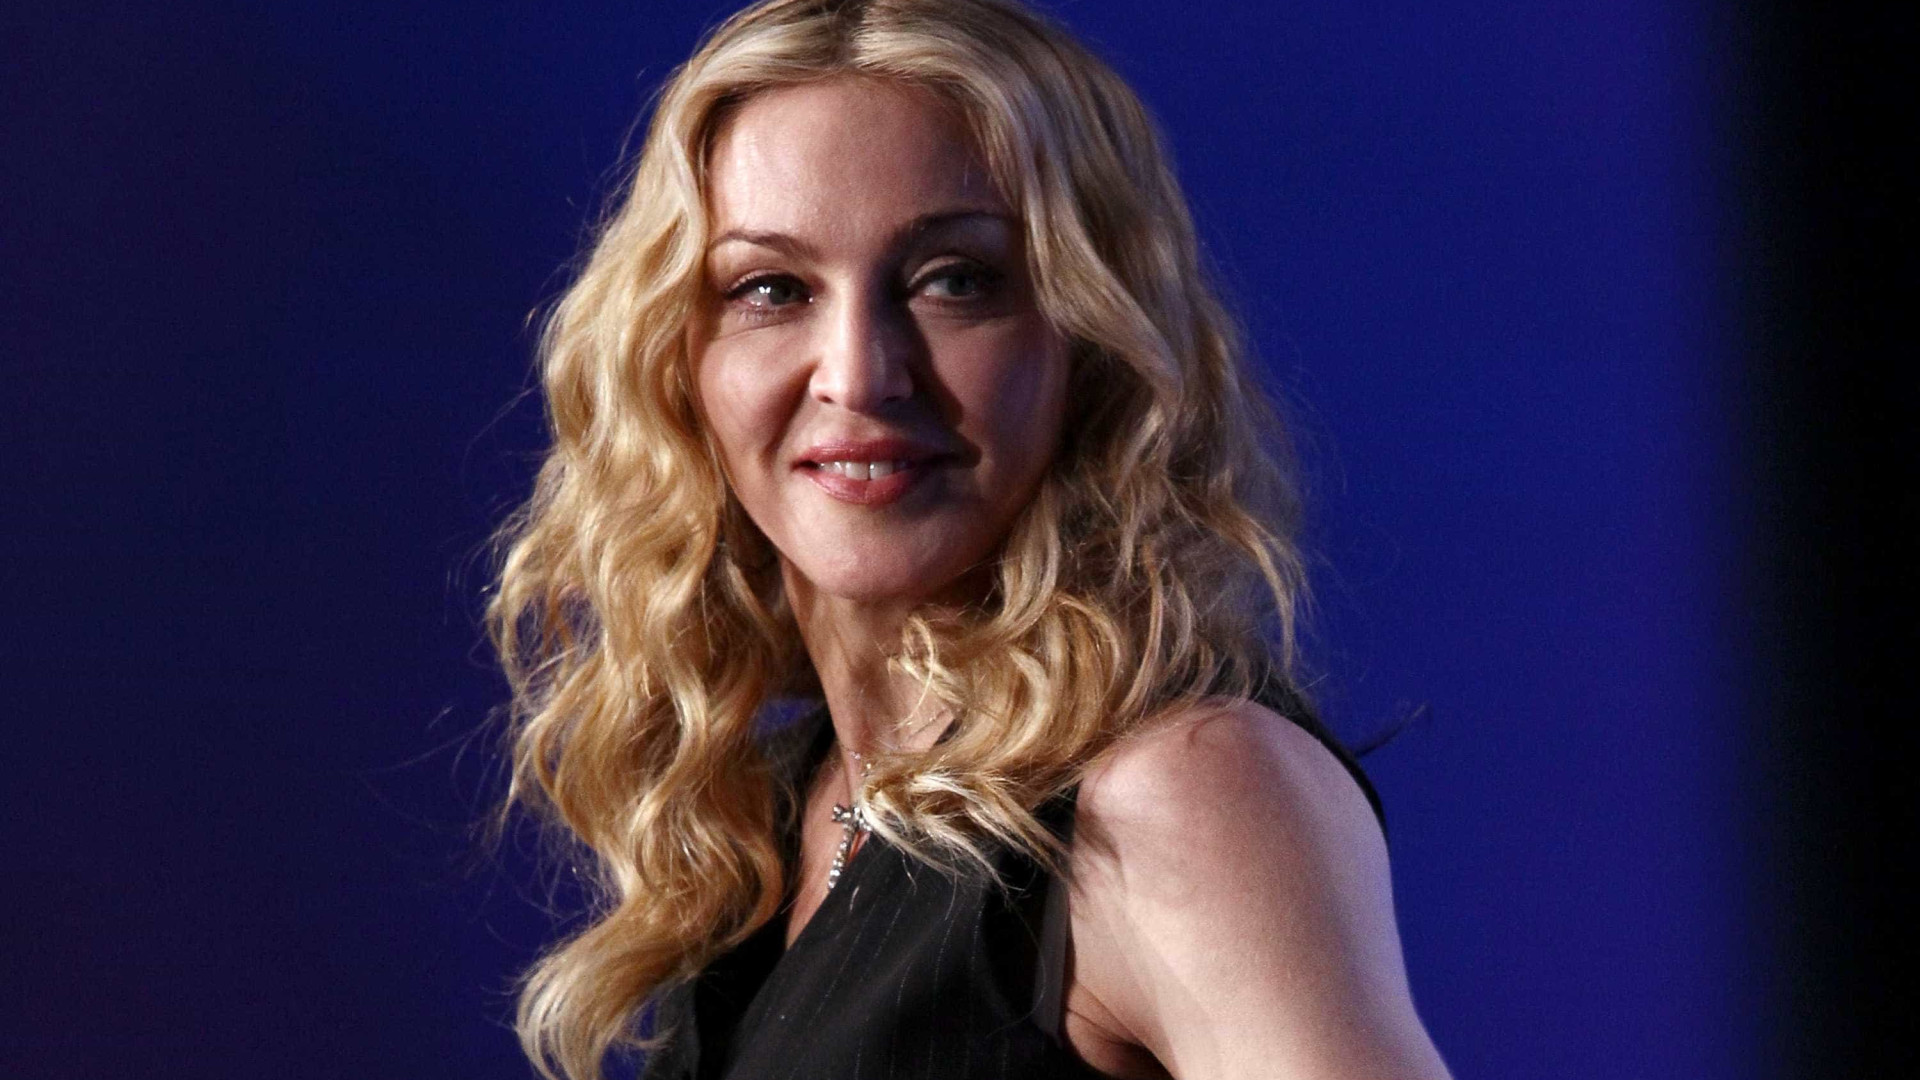 Madonna polemiza ao visitar comunidade do Rio vestindo look militar